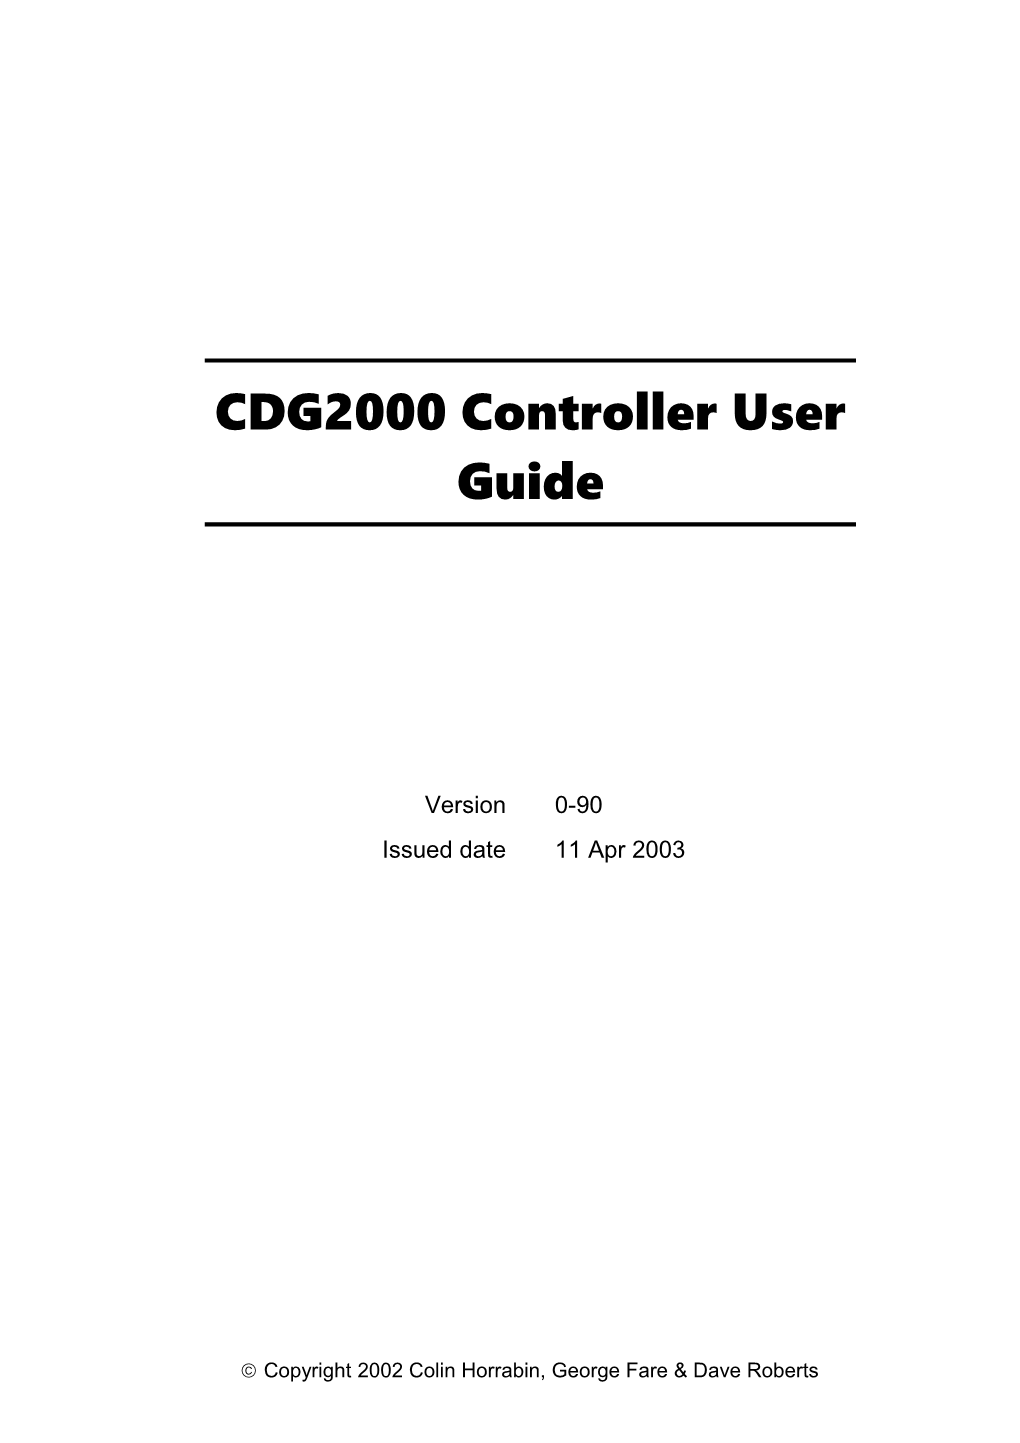 CDG2000 Controller User Guide